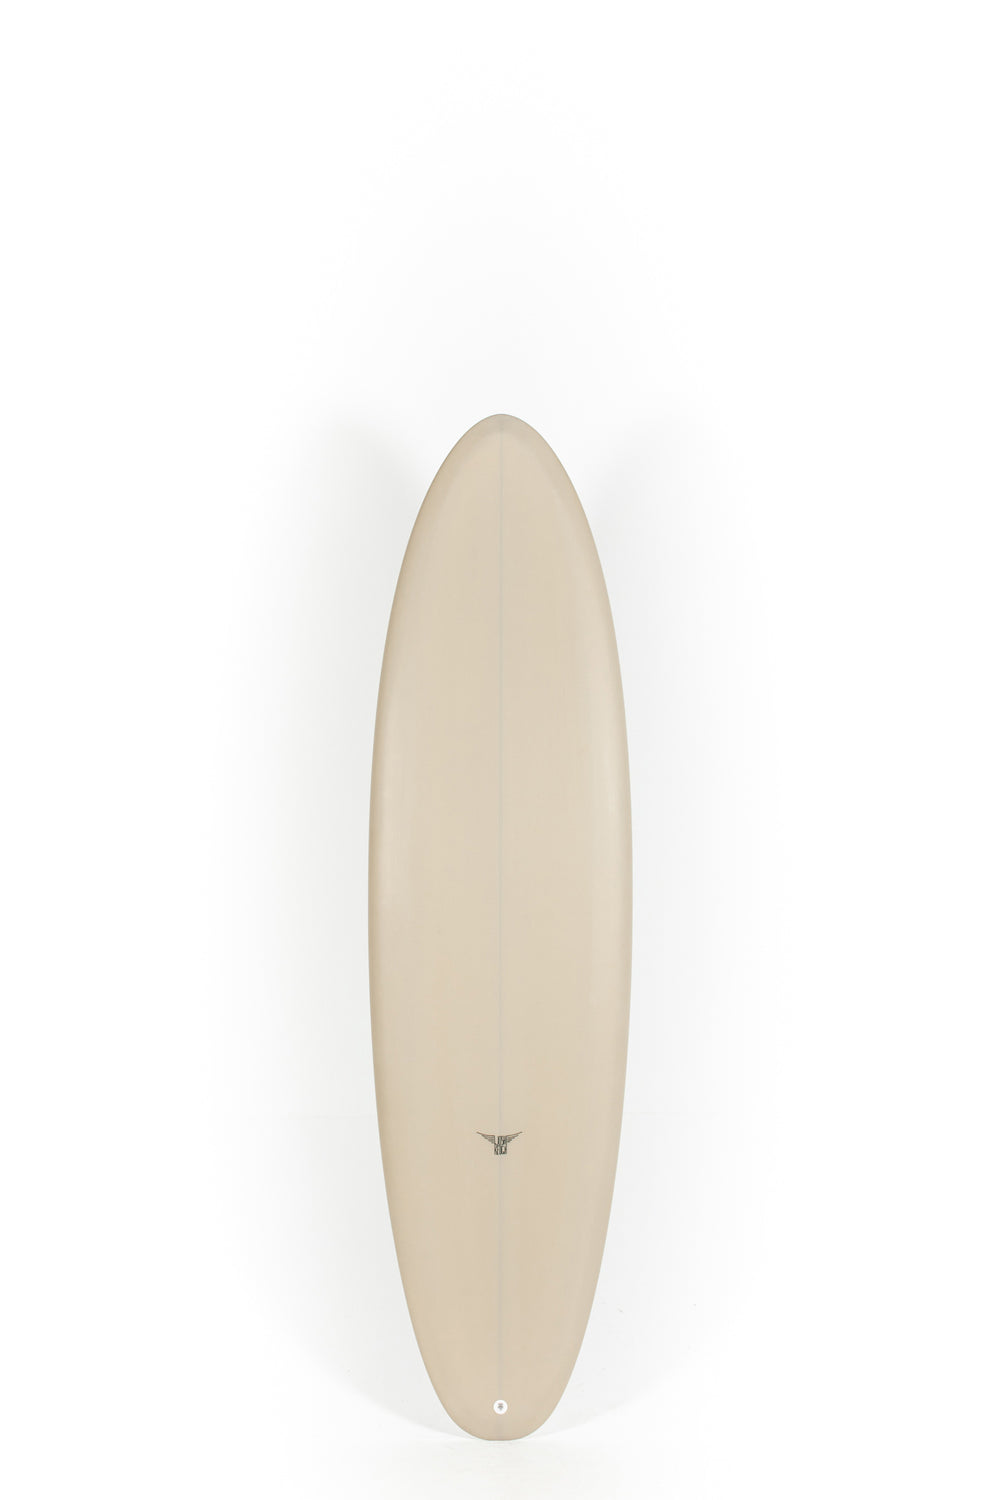 Pukas Surf Shop_Joshua Keogh Surfboard - LIBERATOR SINGLE by Joshua Keogh - 6'8